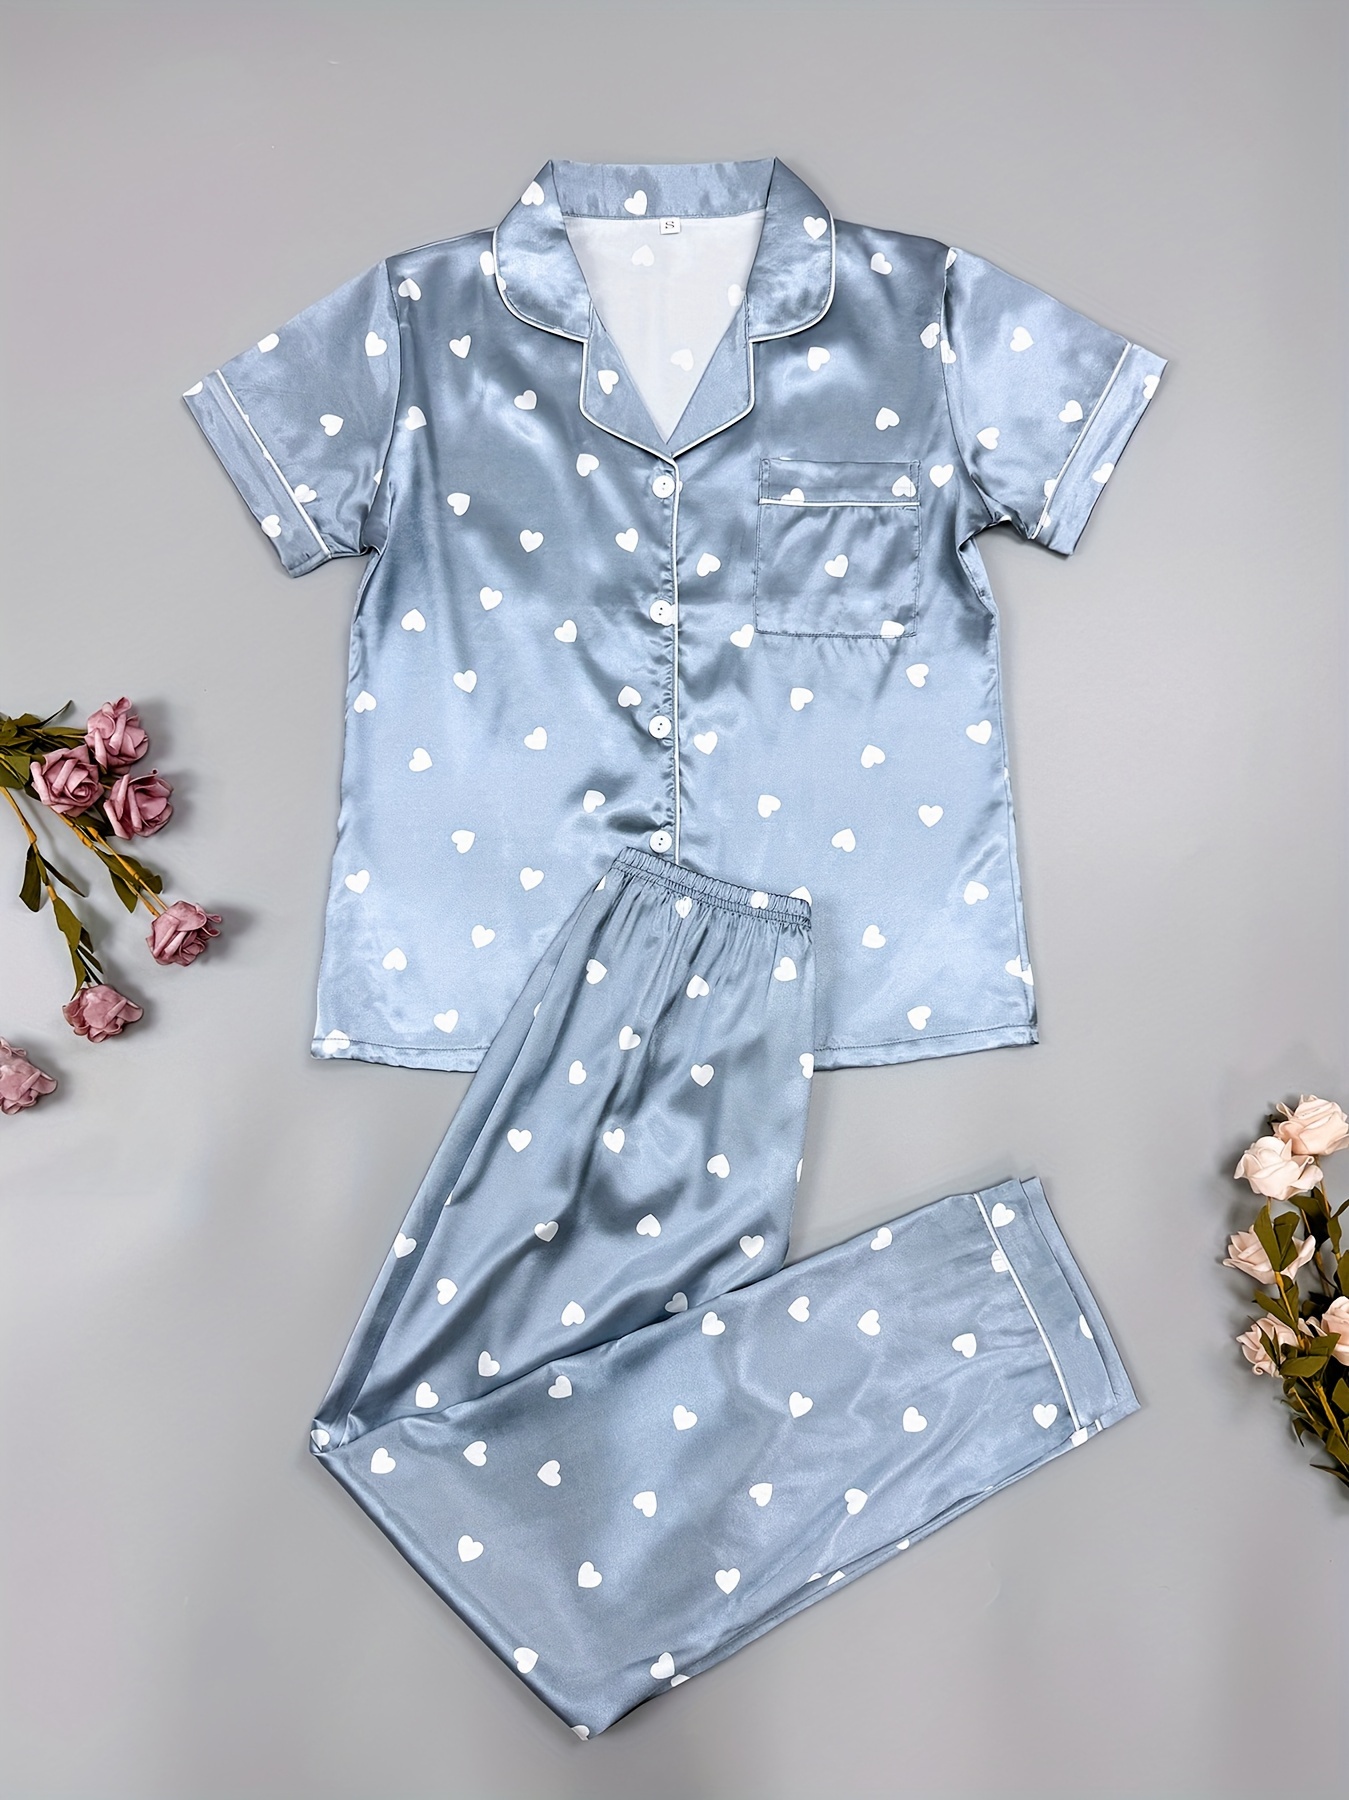 Vlazom Womens Pyjama Sets, Cute Print Lounge Set Short Sleeve Top